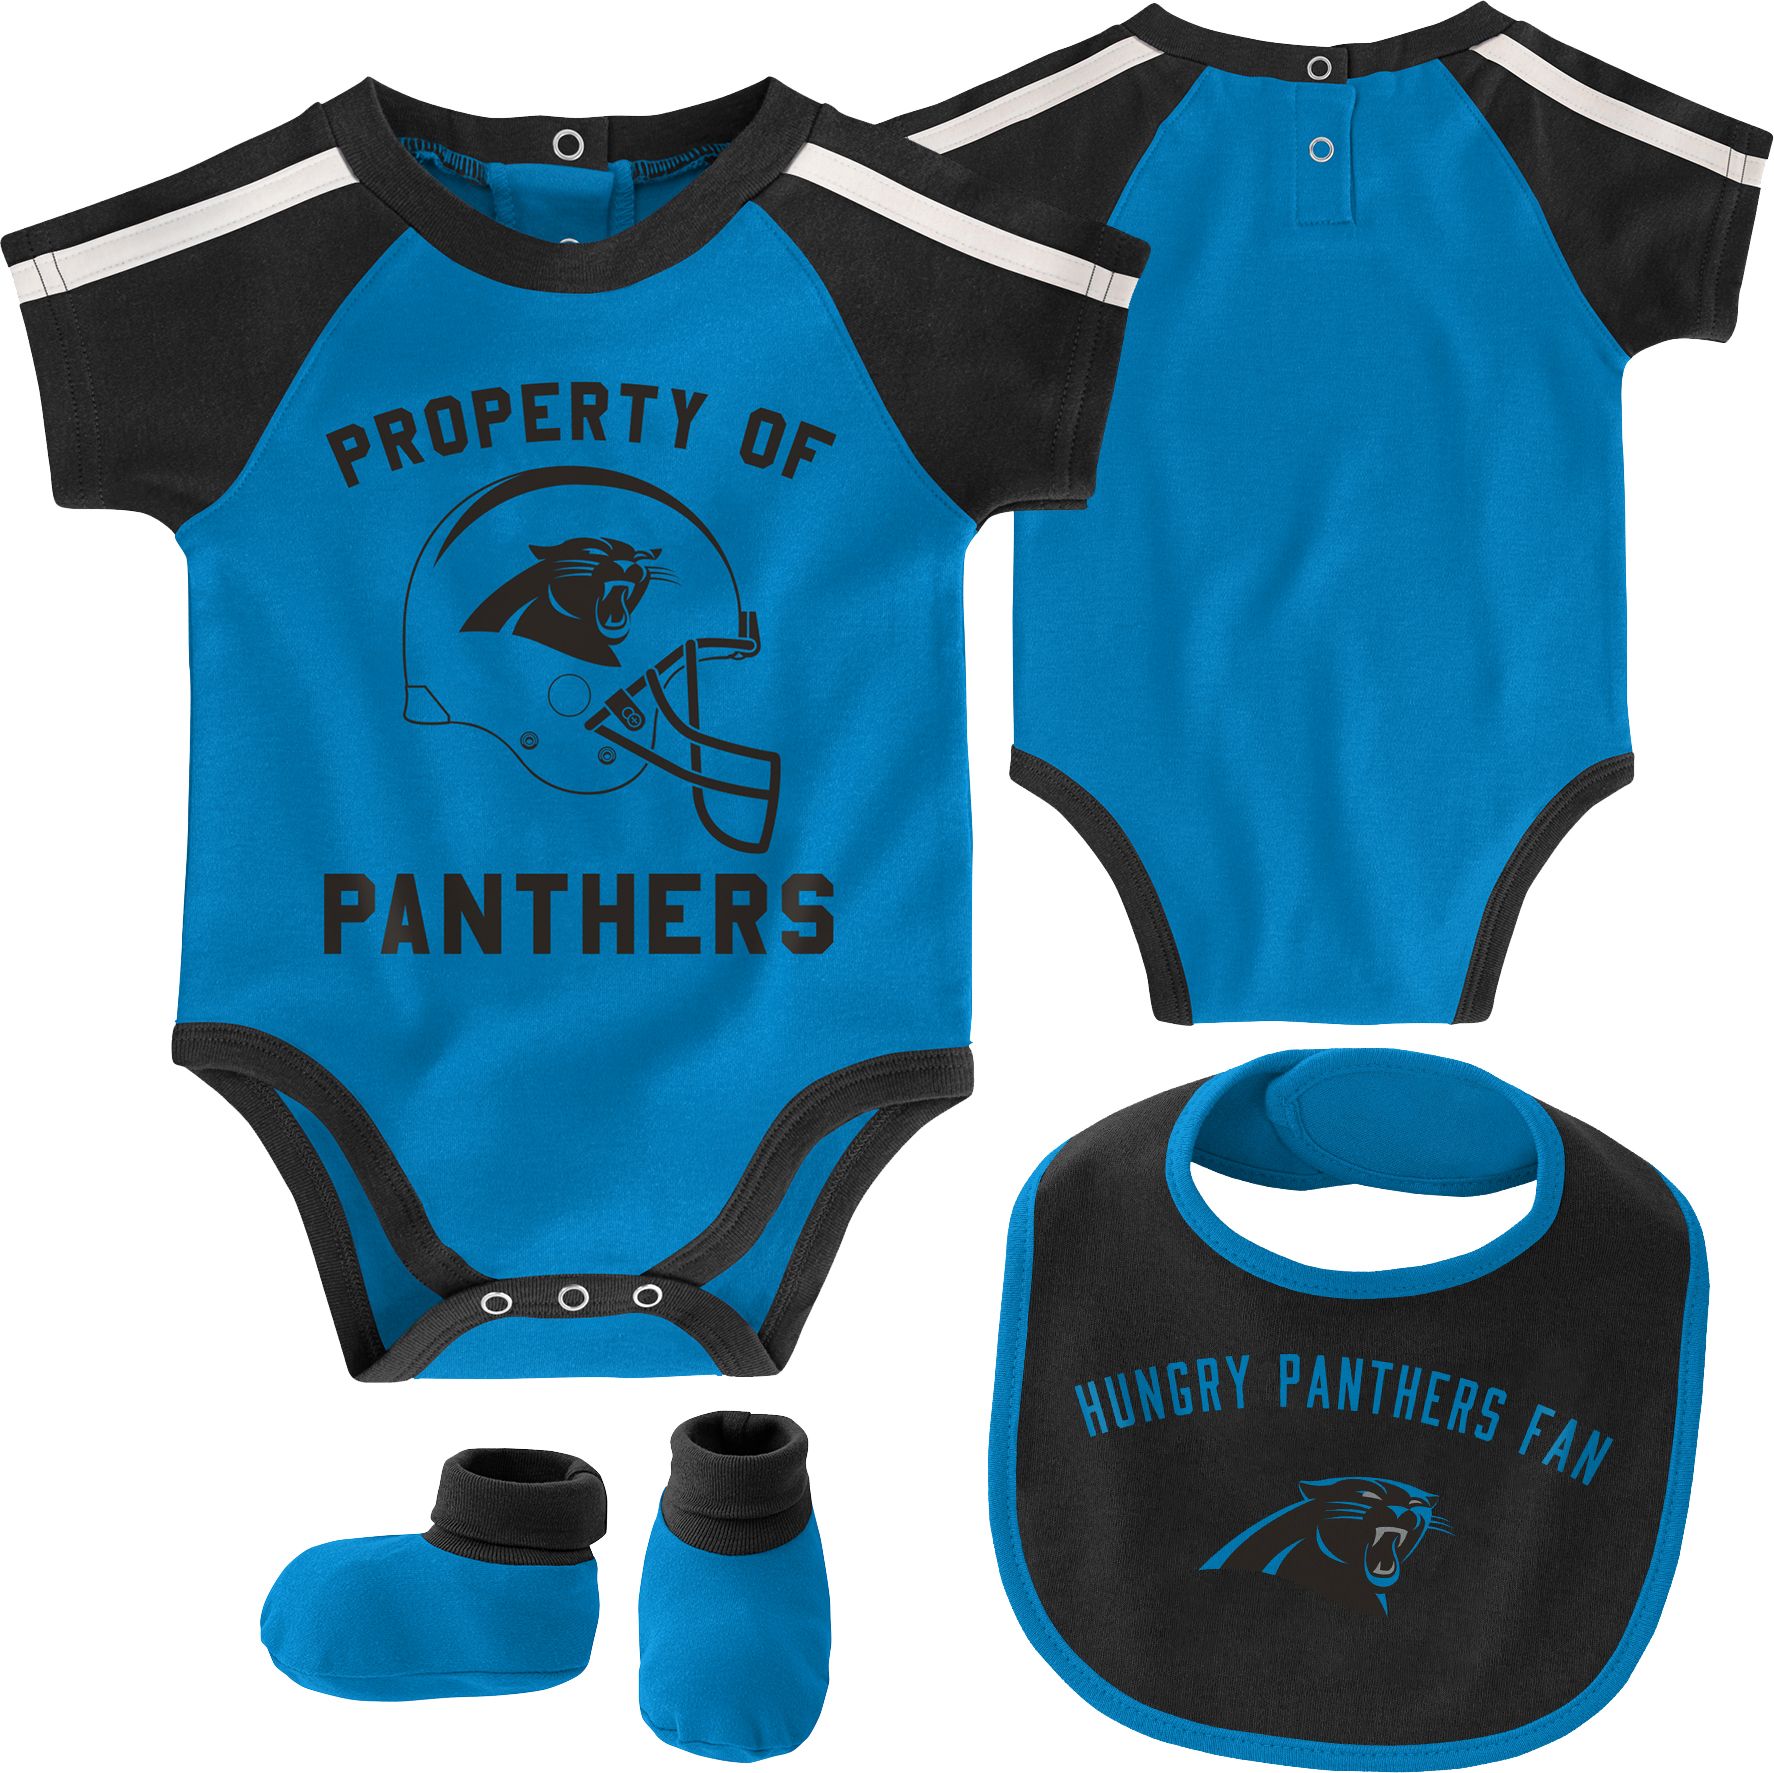 infant carolina panthers jersey